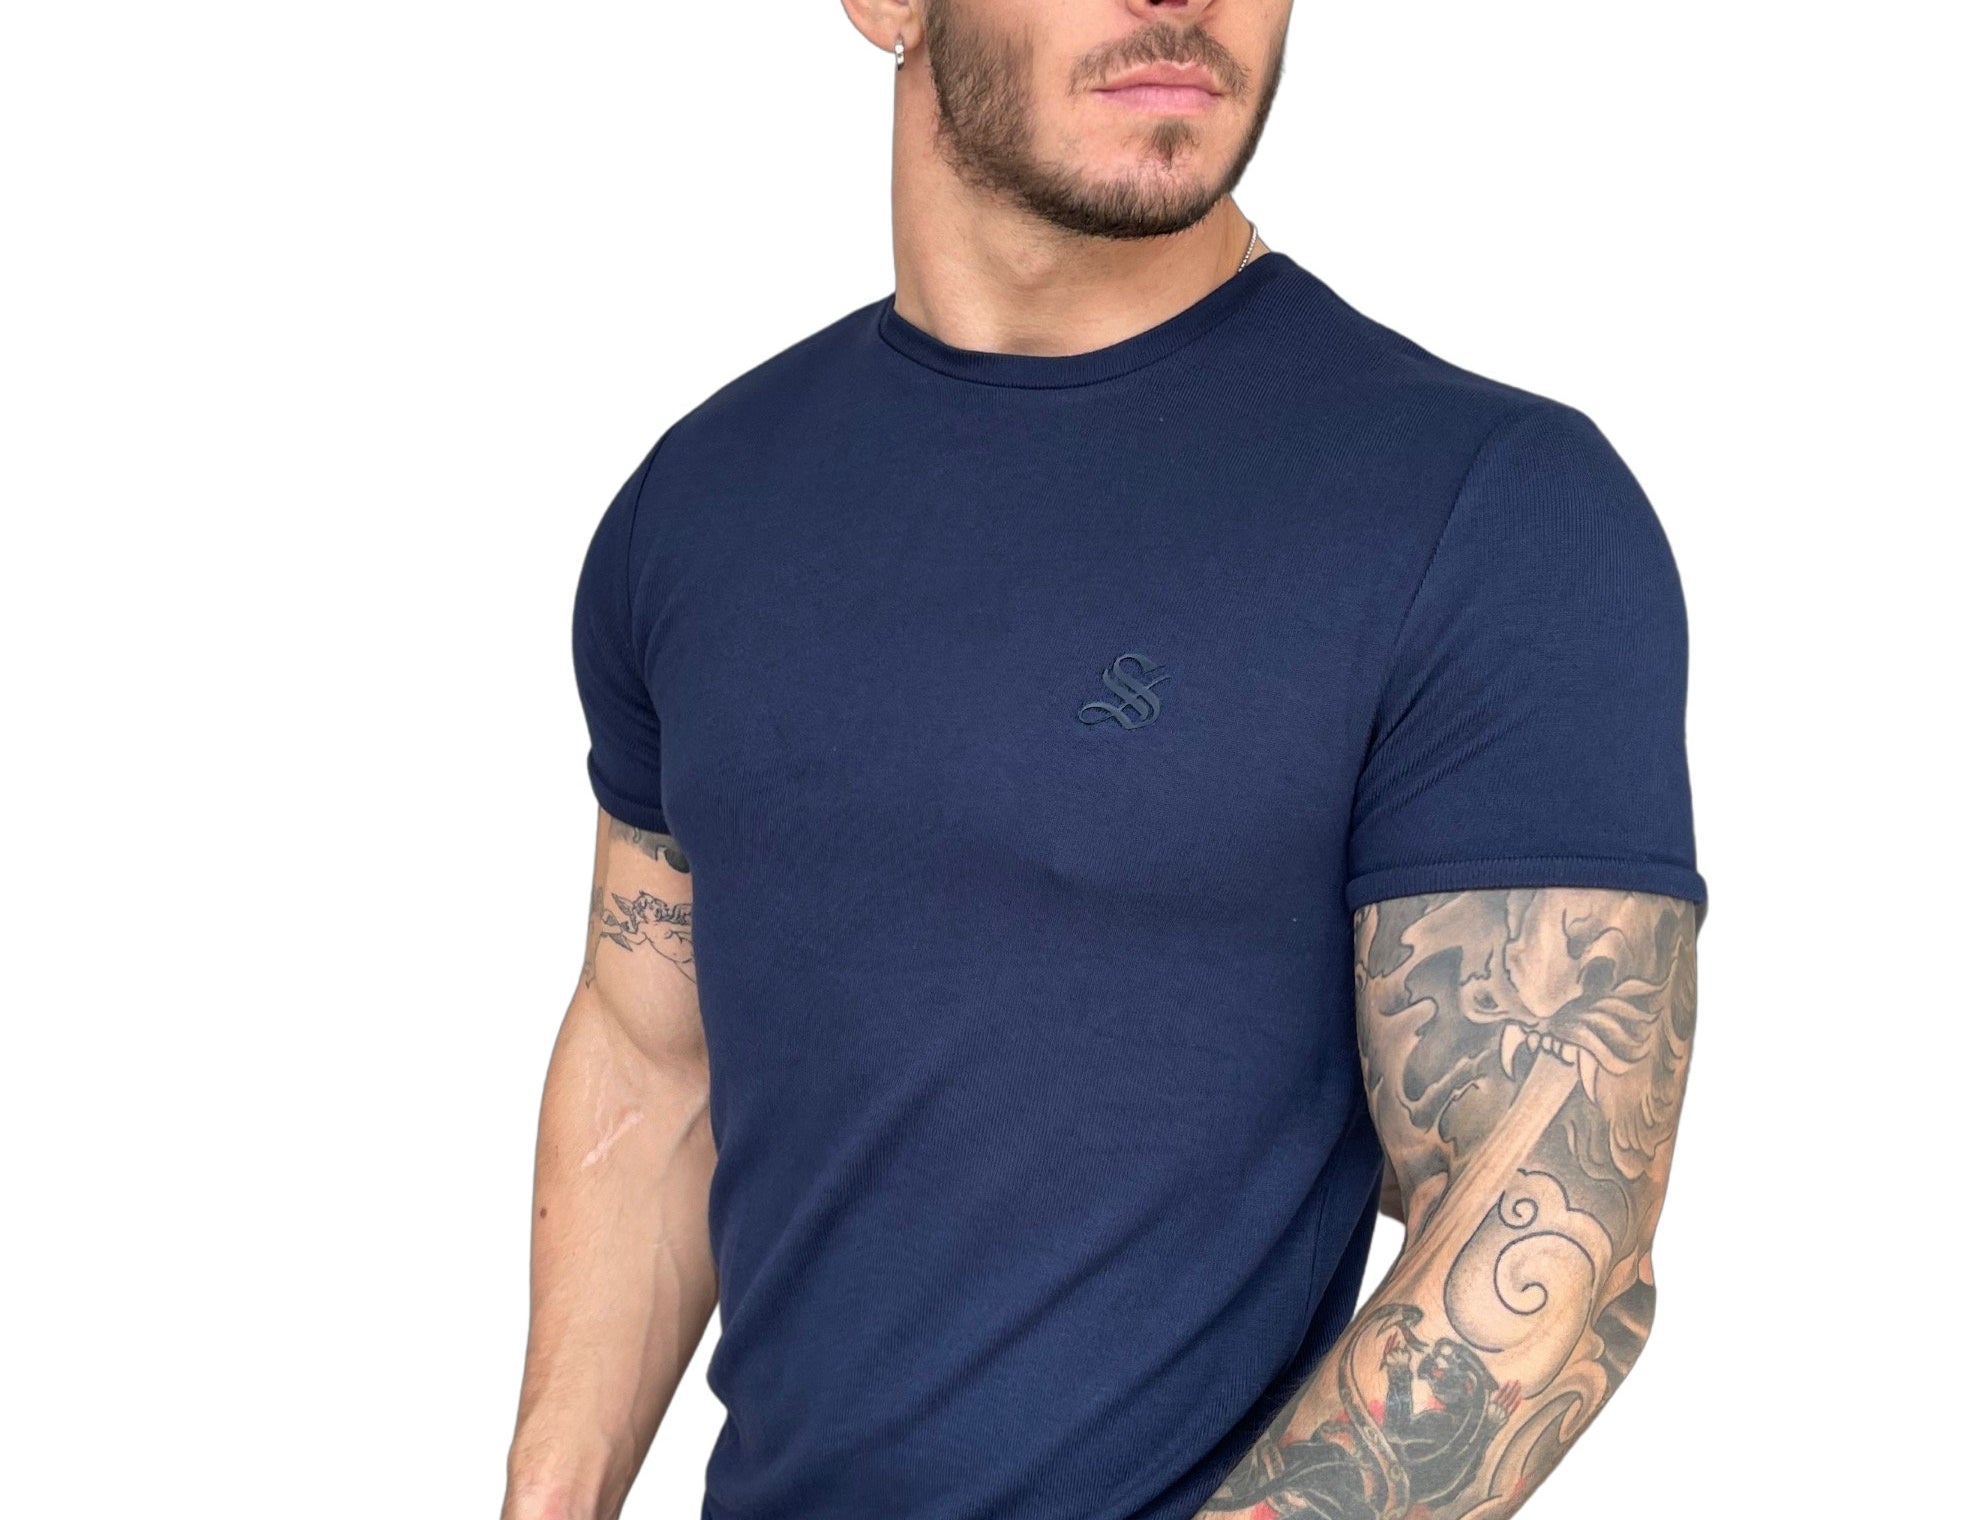 Gravenhage - Blue T-Shirt for Men - Sarman Fashion - Wholesale Clothing Fashion Brand for Men from Canada